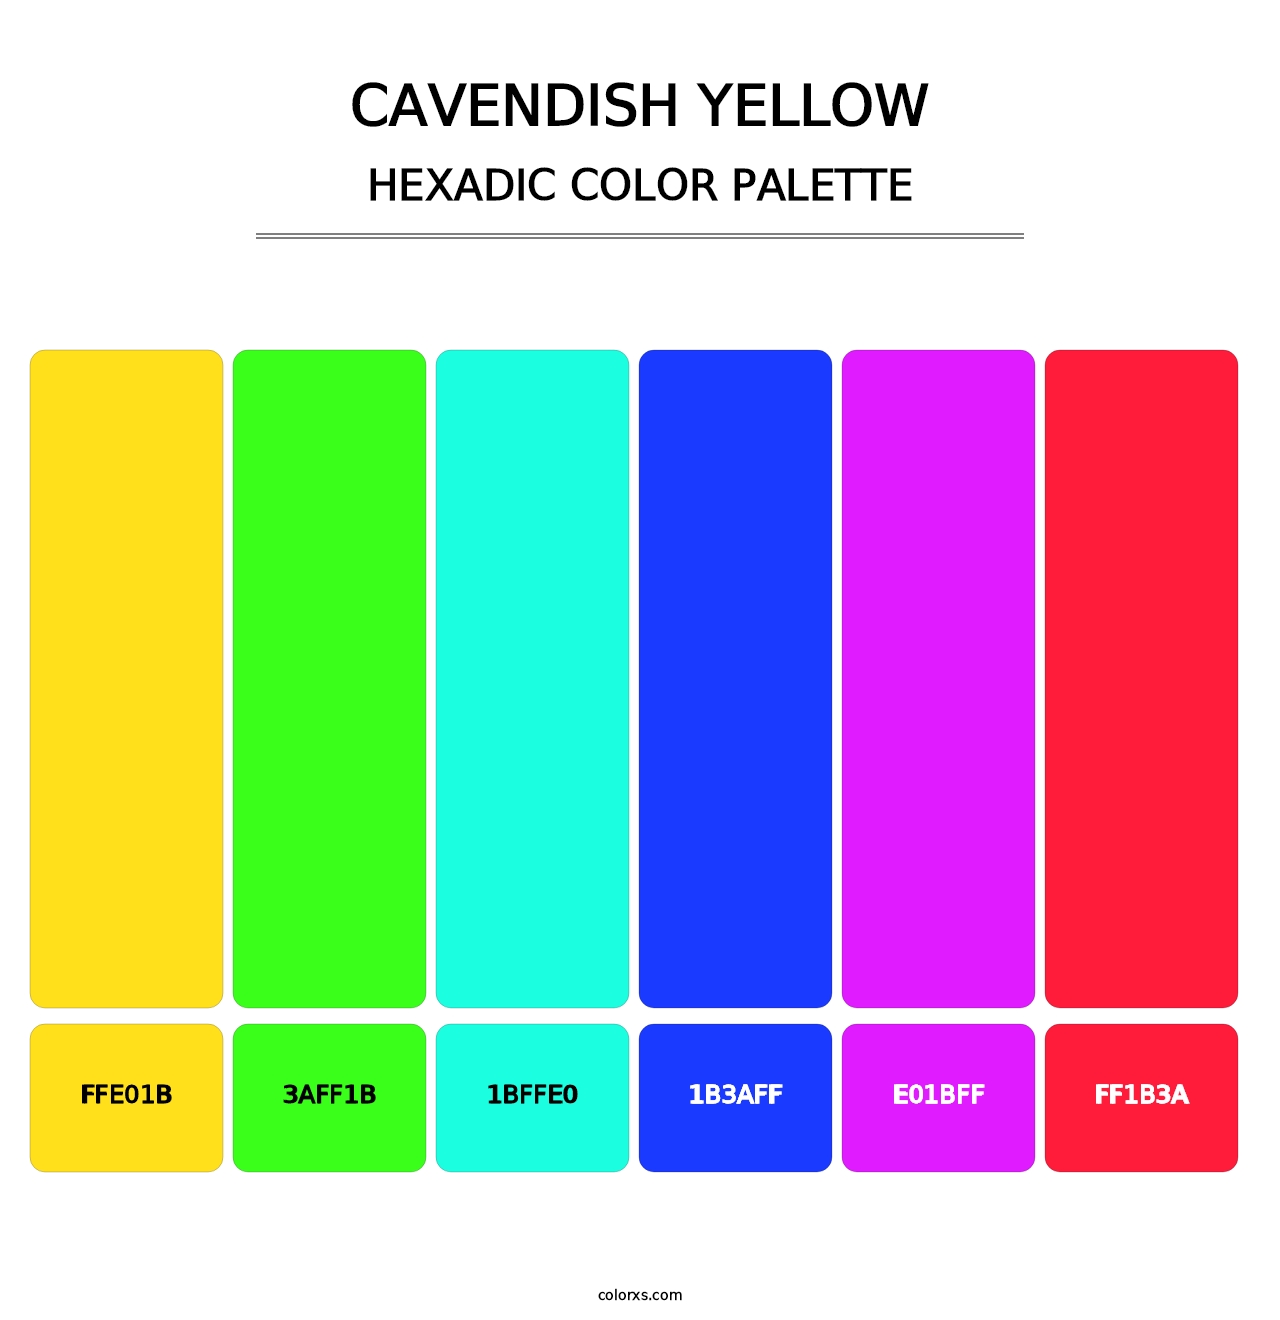 Cavendish Yellow - Hexadic Color Palette